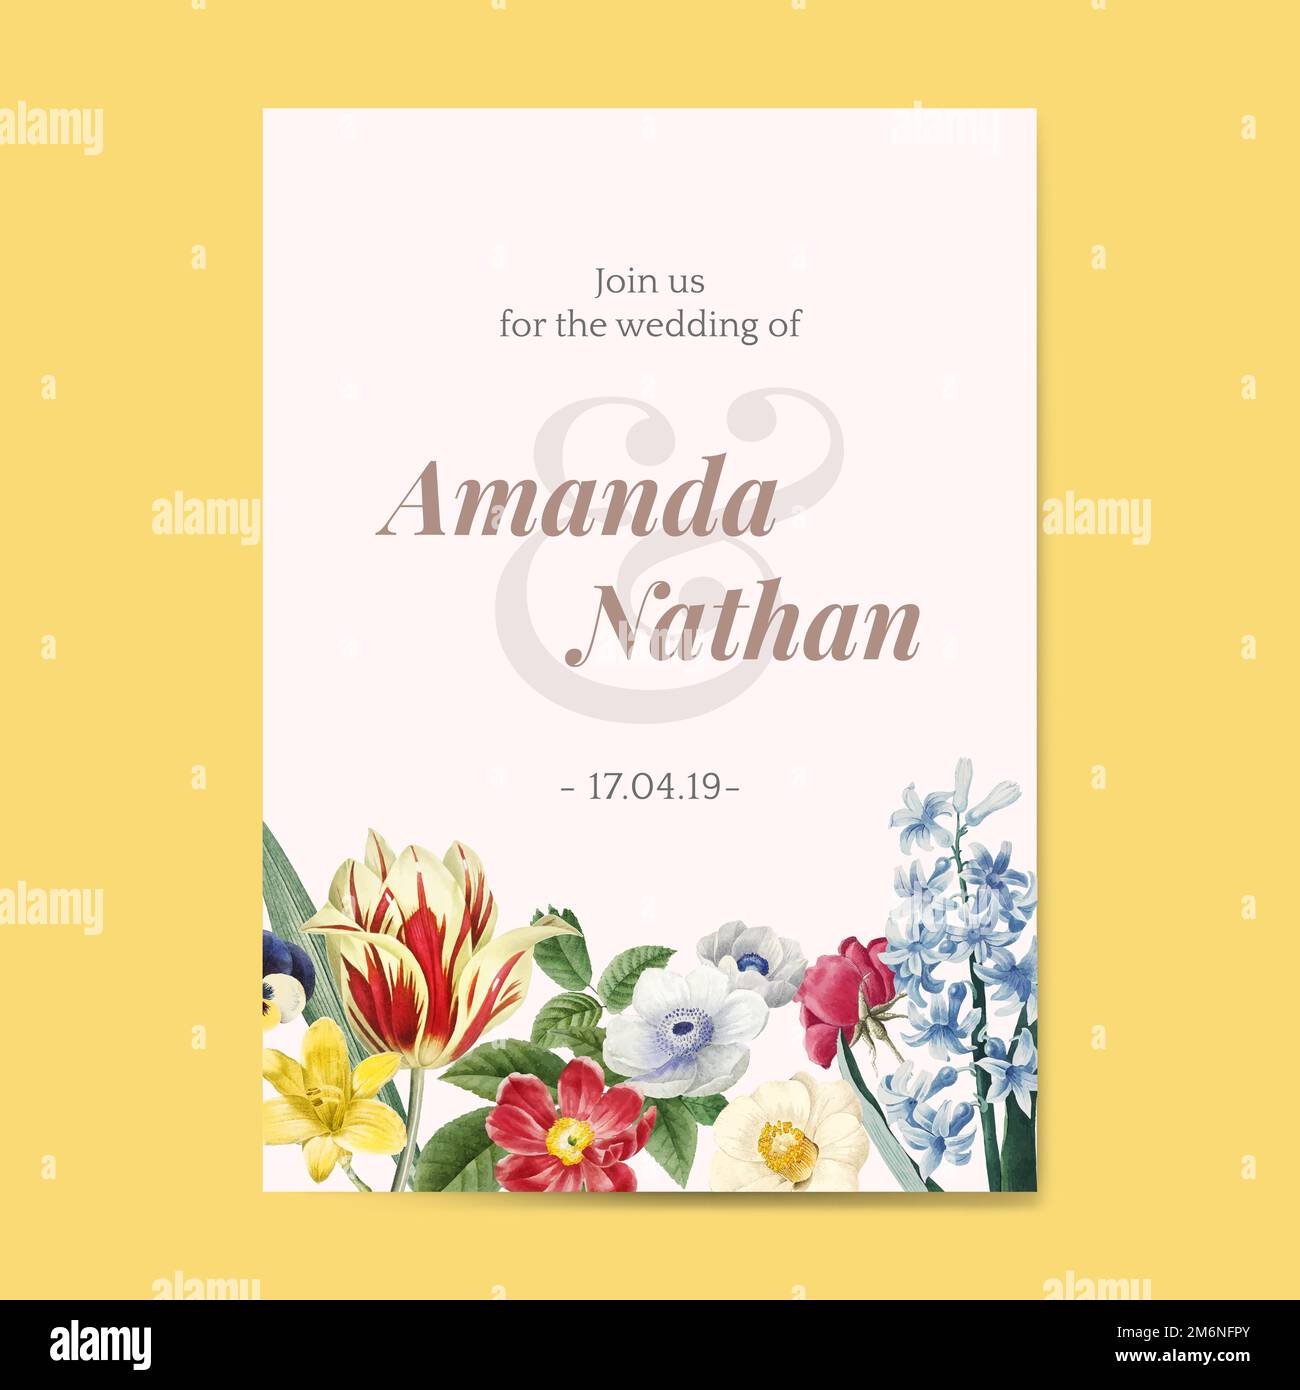 Floral wedding invitation card vector Stock Vector